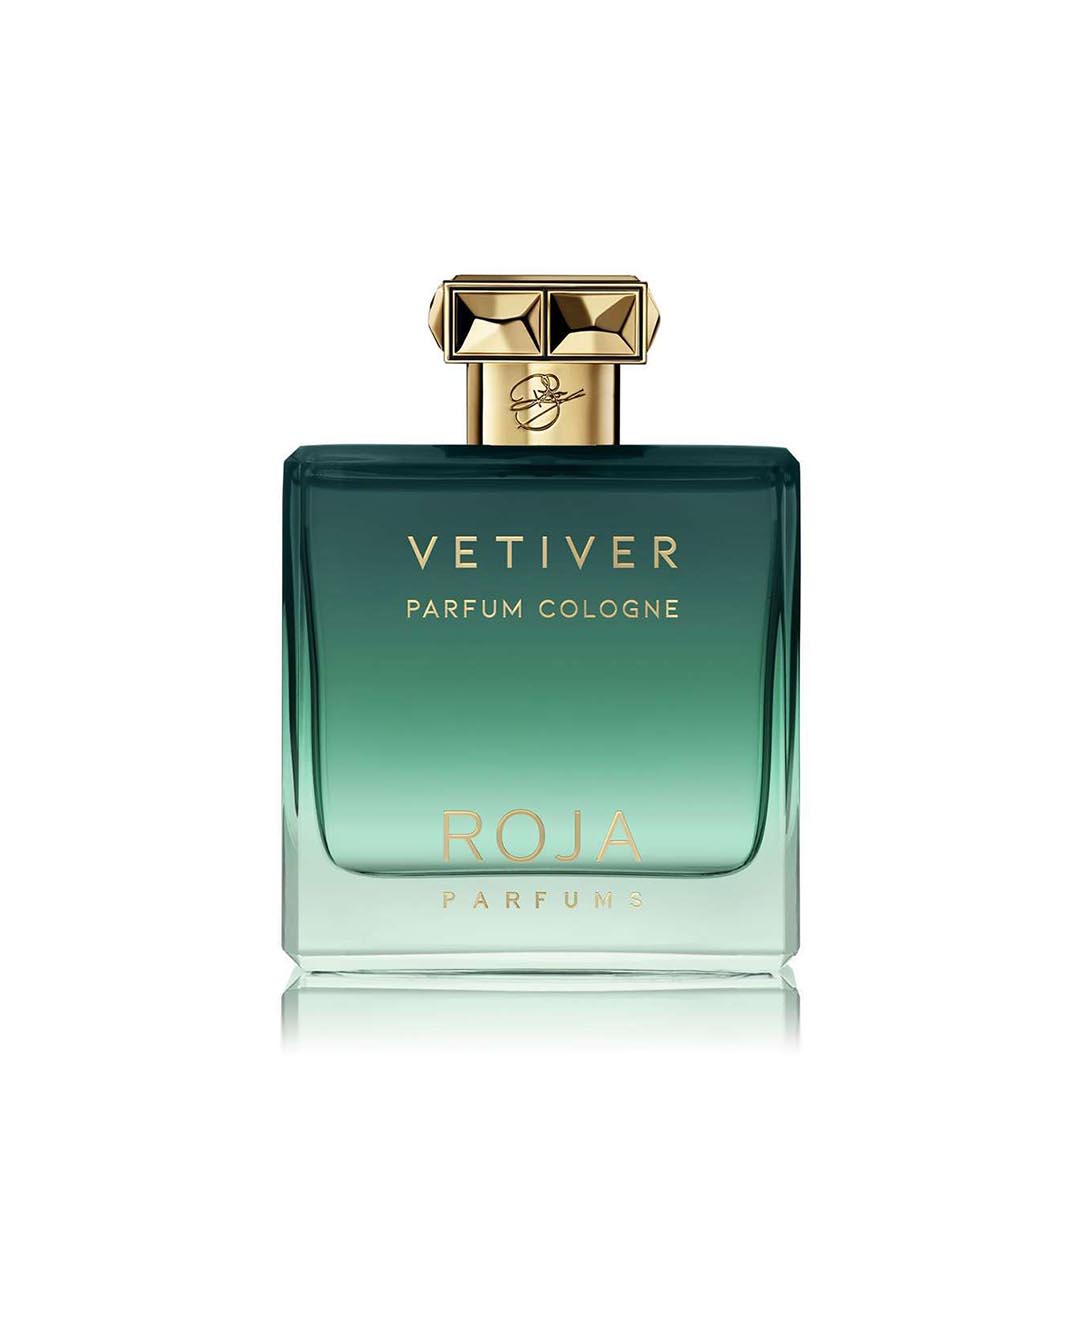 scent_0002_Roja-Vetiver-Pour-Homme-Cologne-Clear-cut